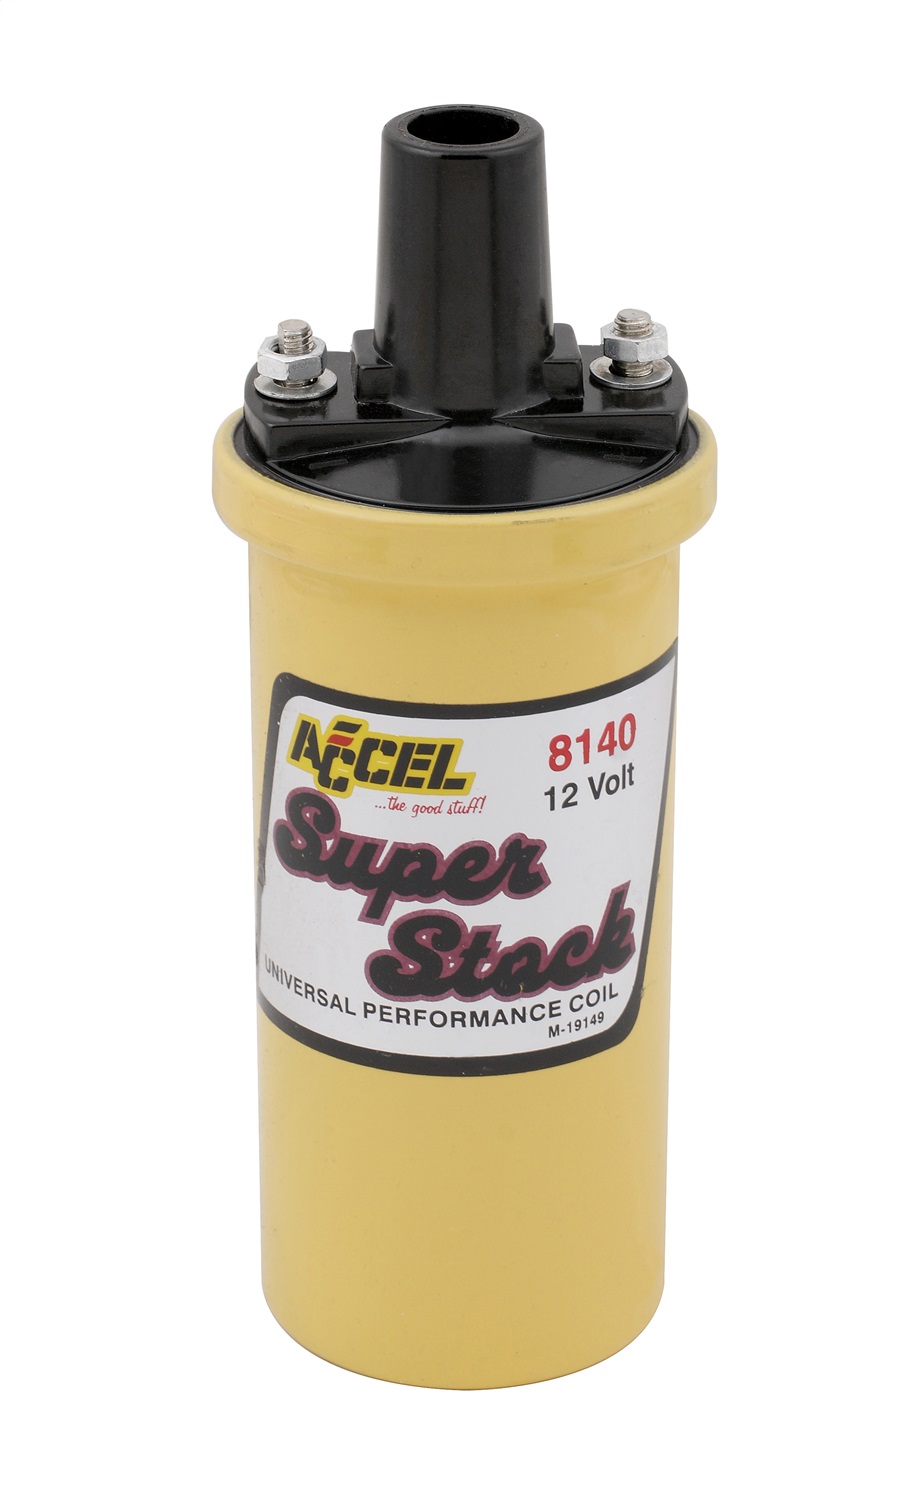 ACCEL ACCEL 8140 Super Stock Coil